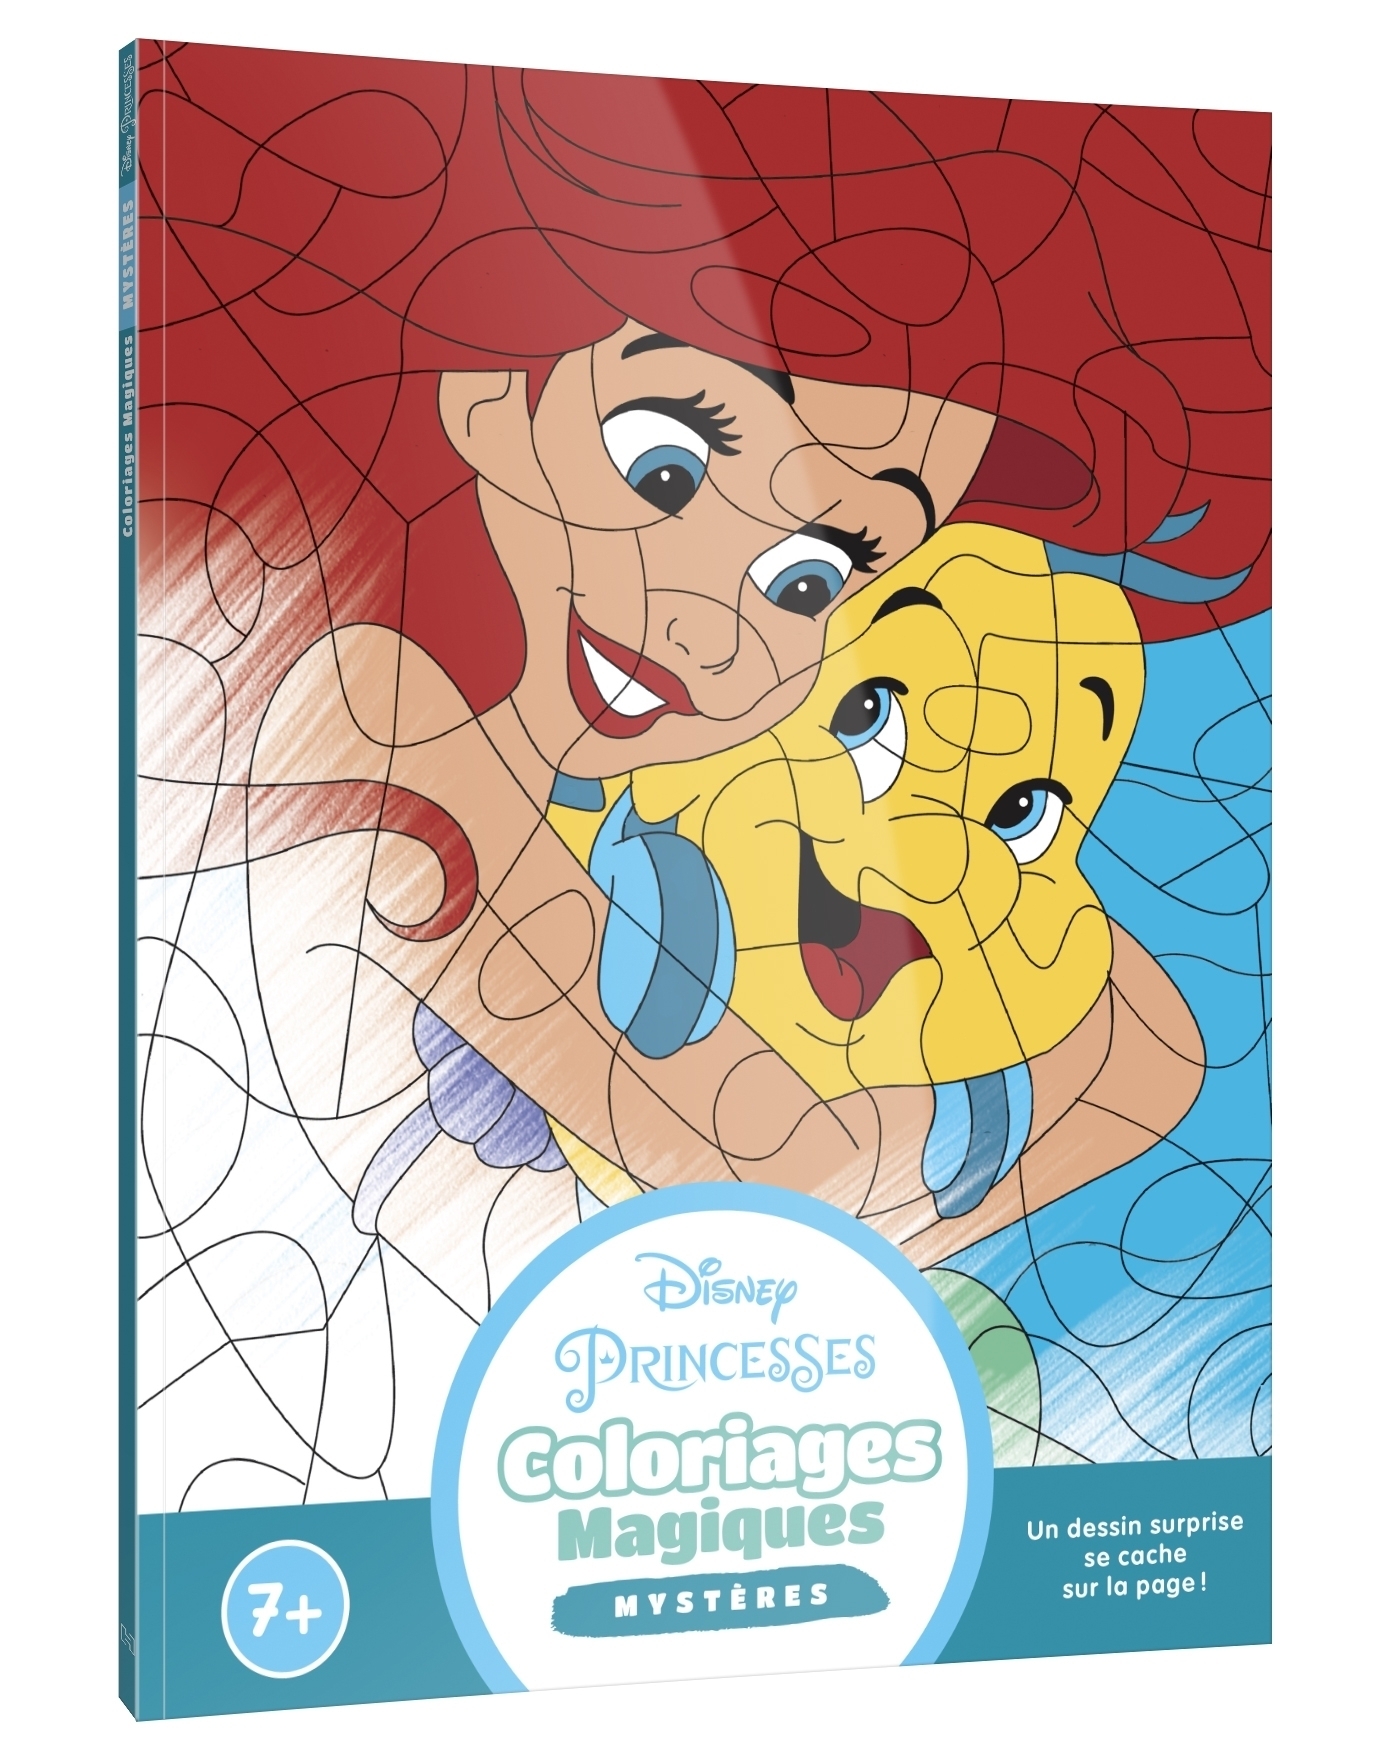 Walt Disney company - Disney princesses : coloriages magiques : messages  mystères